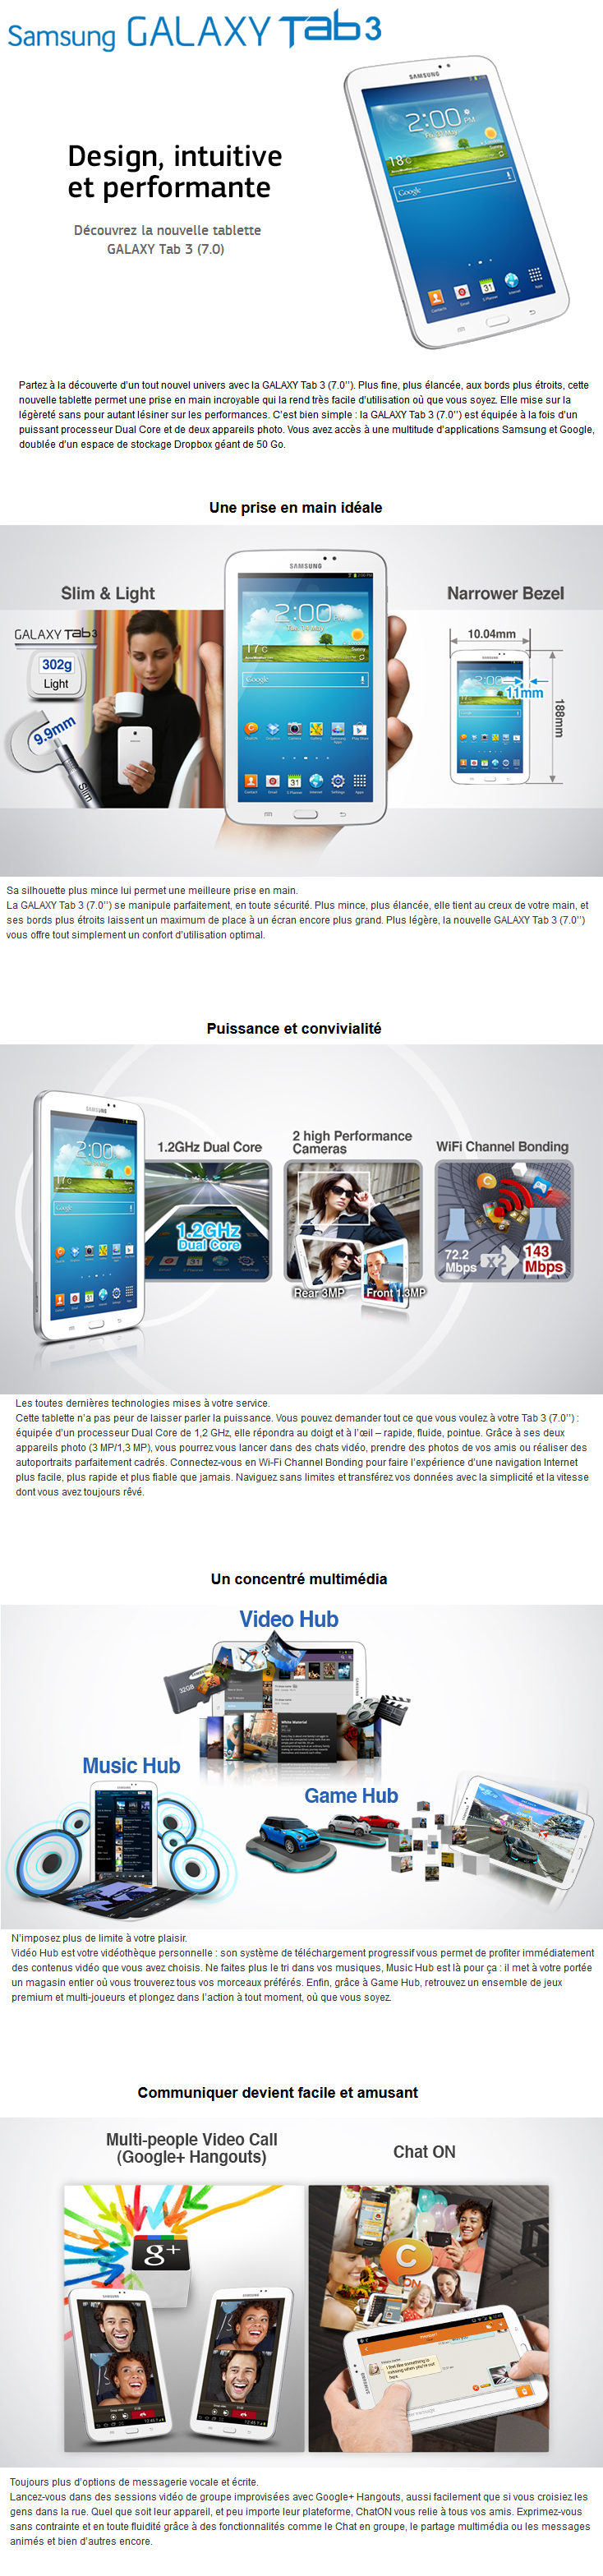 Tablette Samsung Galaxy Tab 3 Lite (3G) white (SM-T116NDWAMWD) - Fourniture  bureau Tanger, Maroc